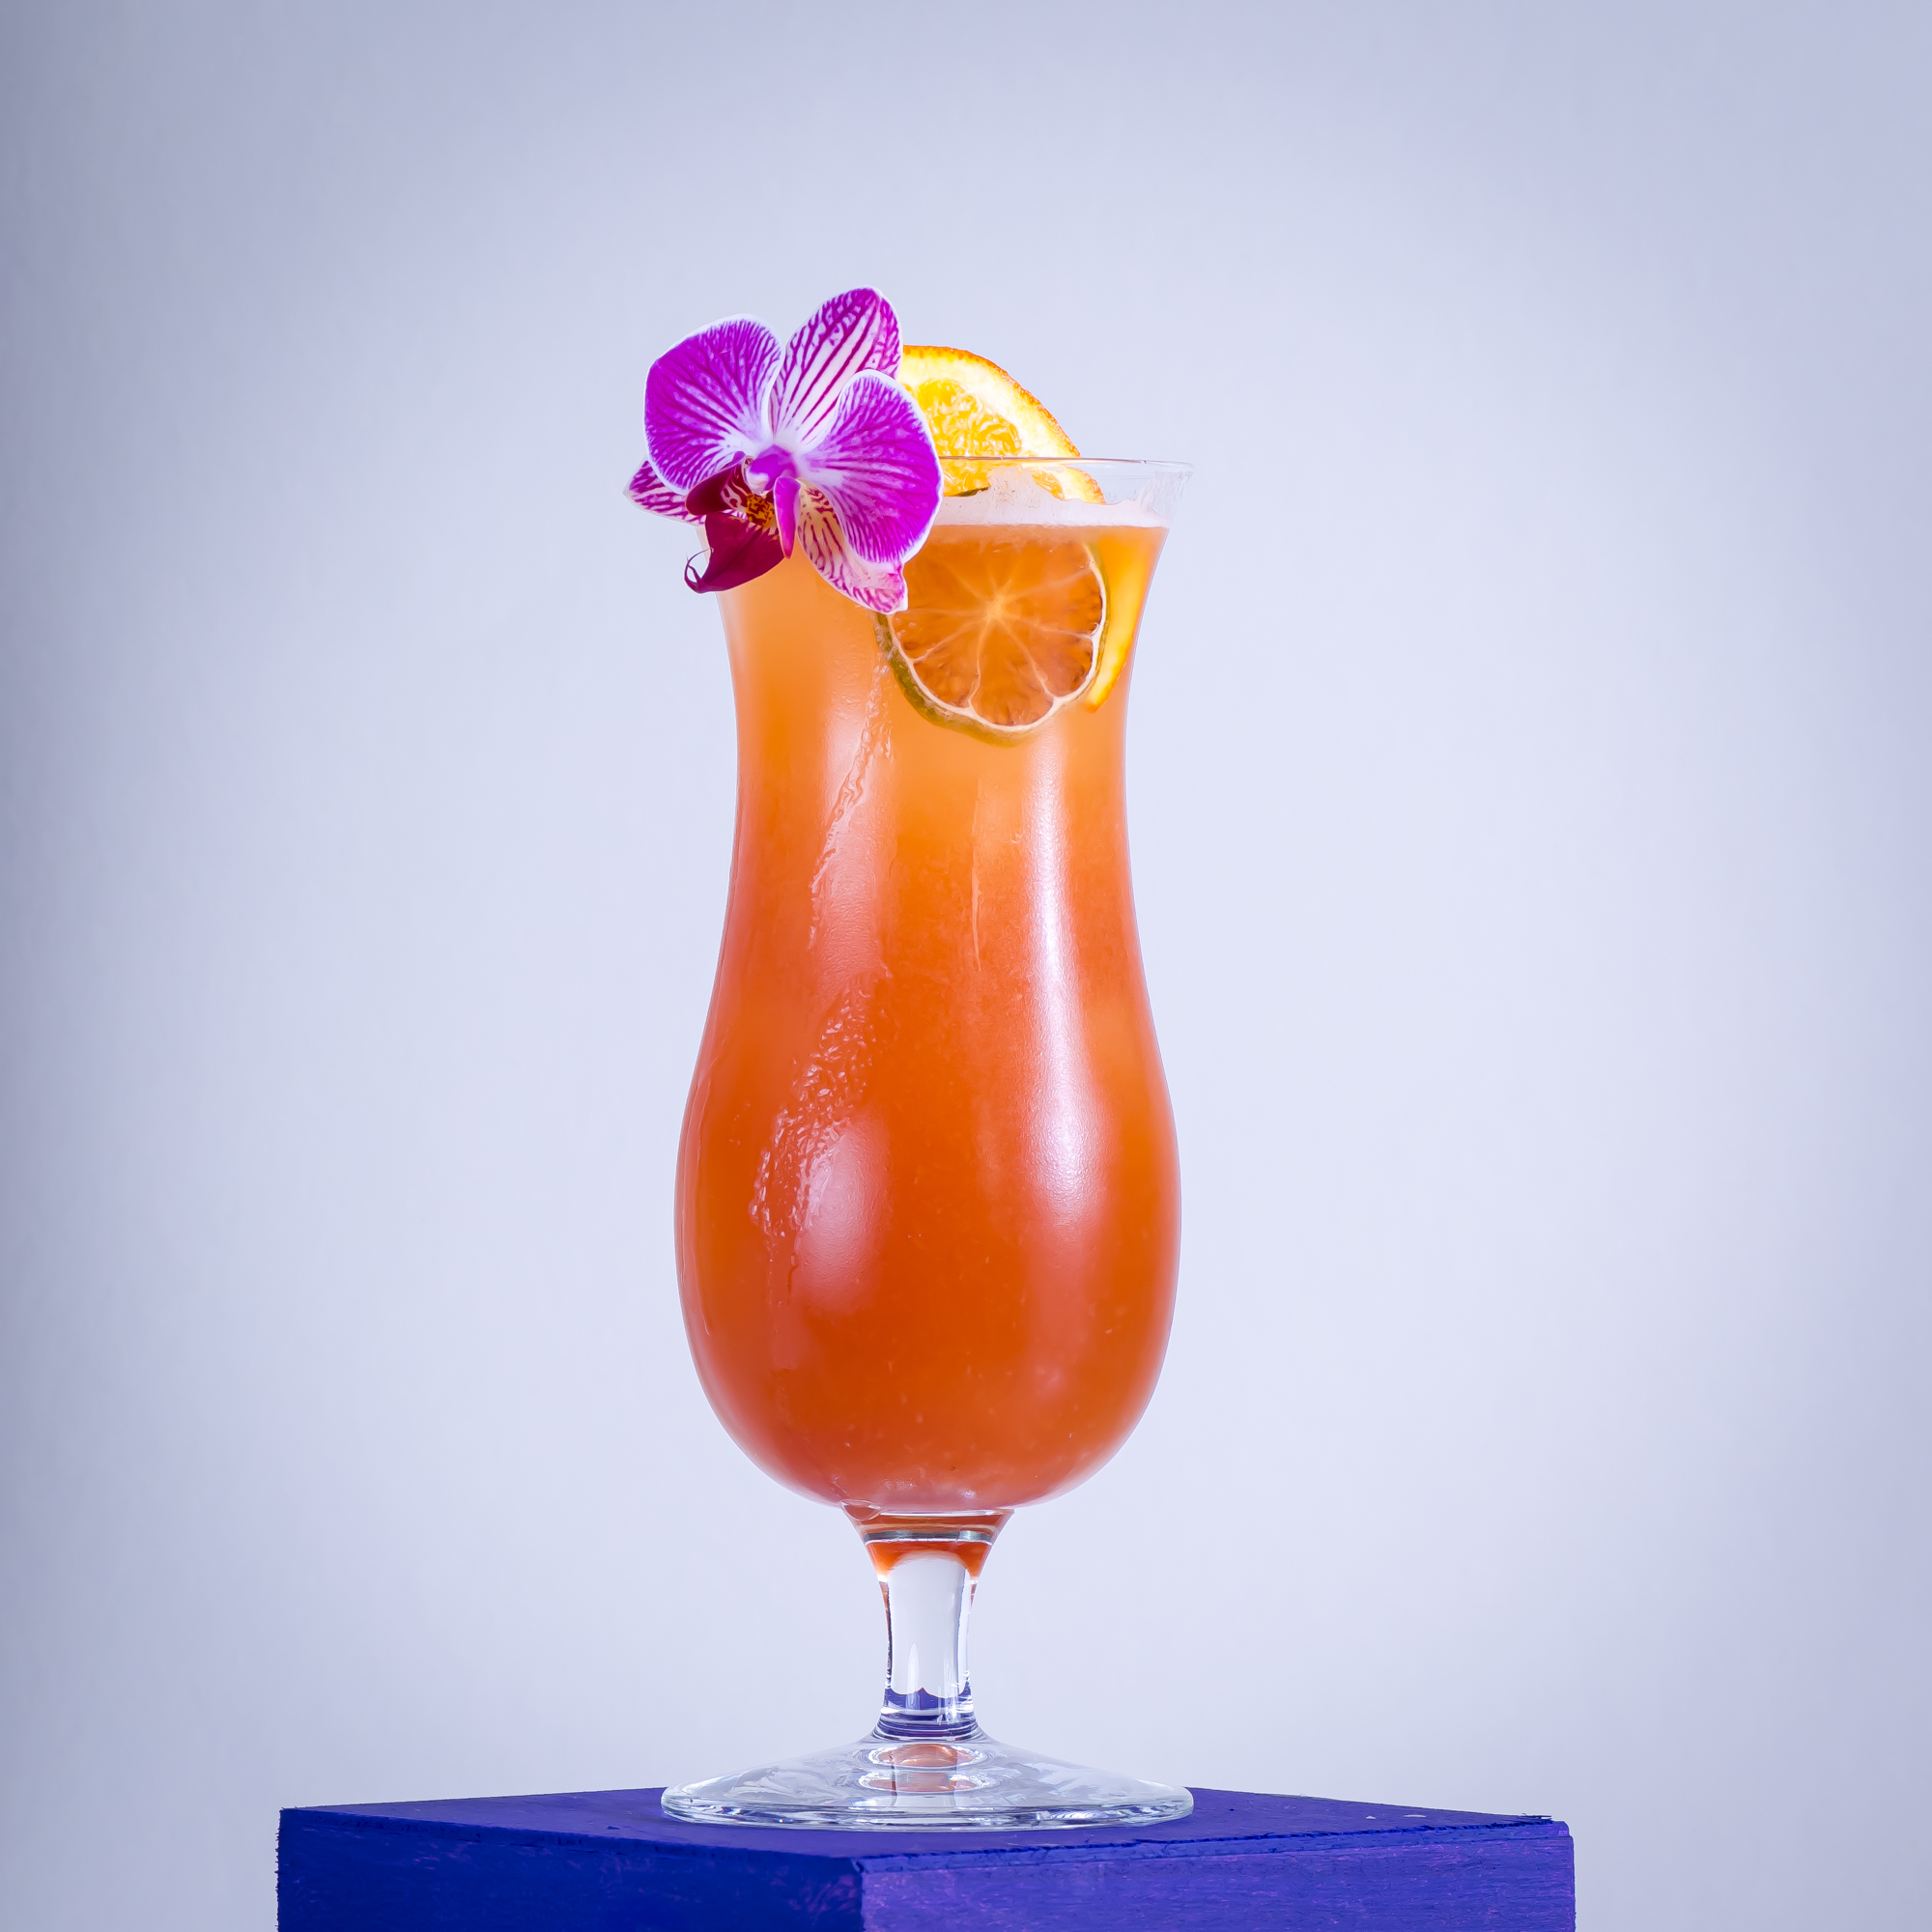 Bahama Mama | Cocktail-Rezept mit 3 Sorten Rum